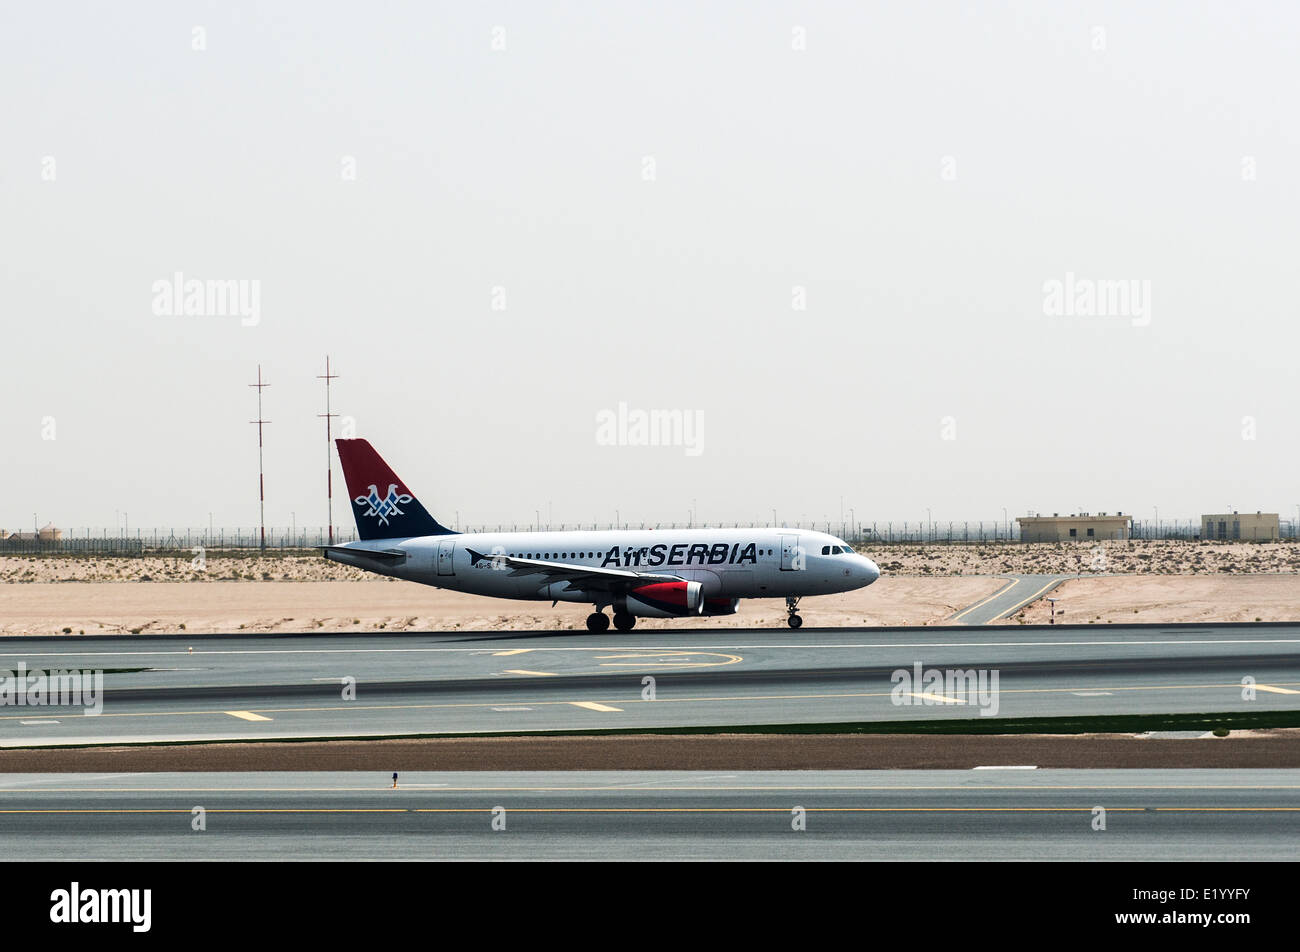 Ein Flugzeug der Air Serbia am Abu Dhabi Airport. Stockfoto